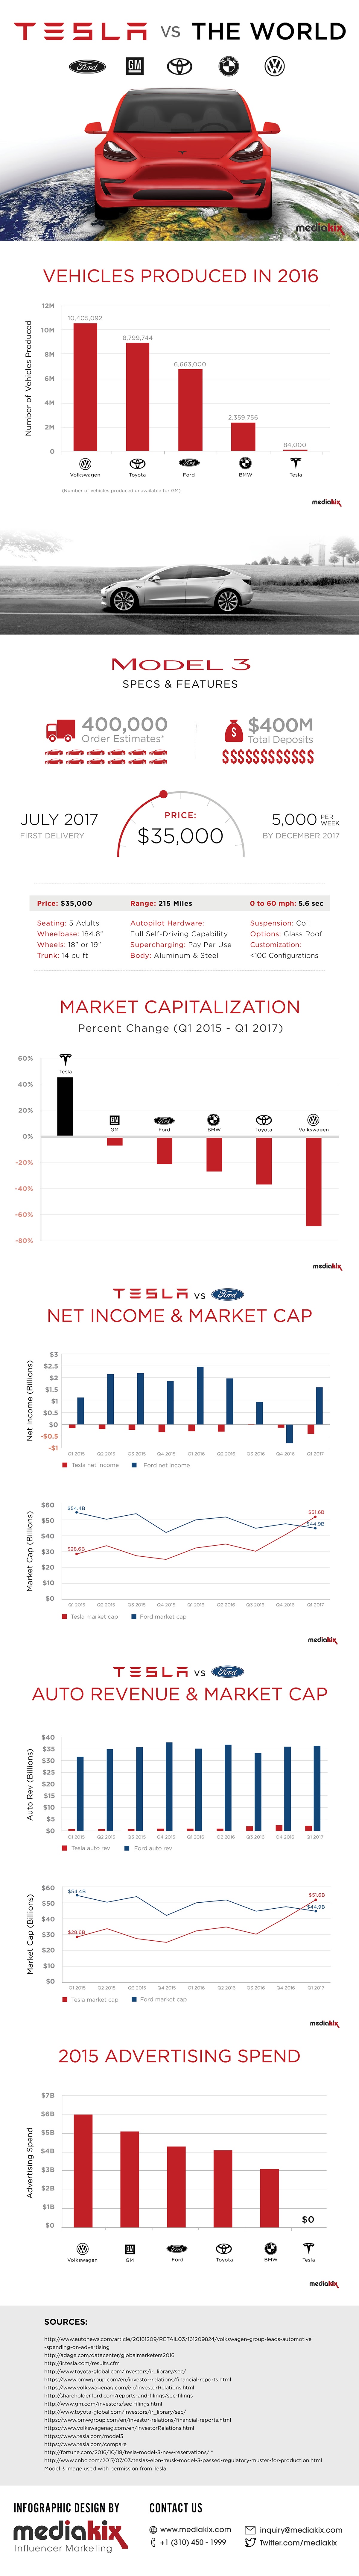 Tesla Vs. The World #infographic